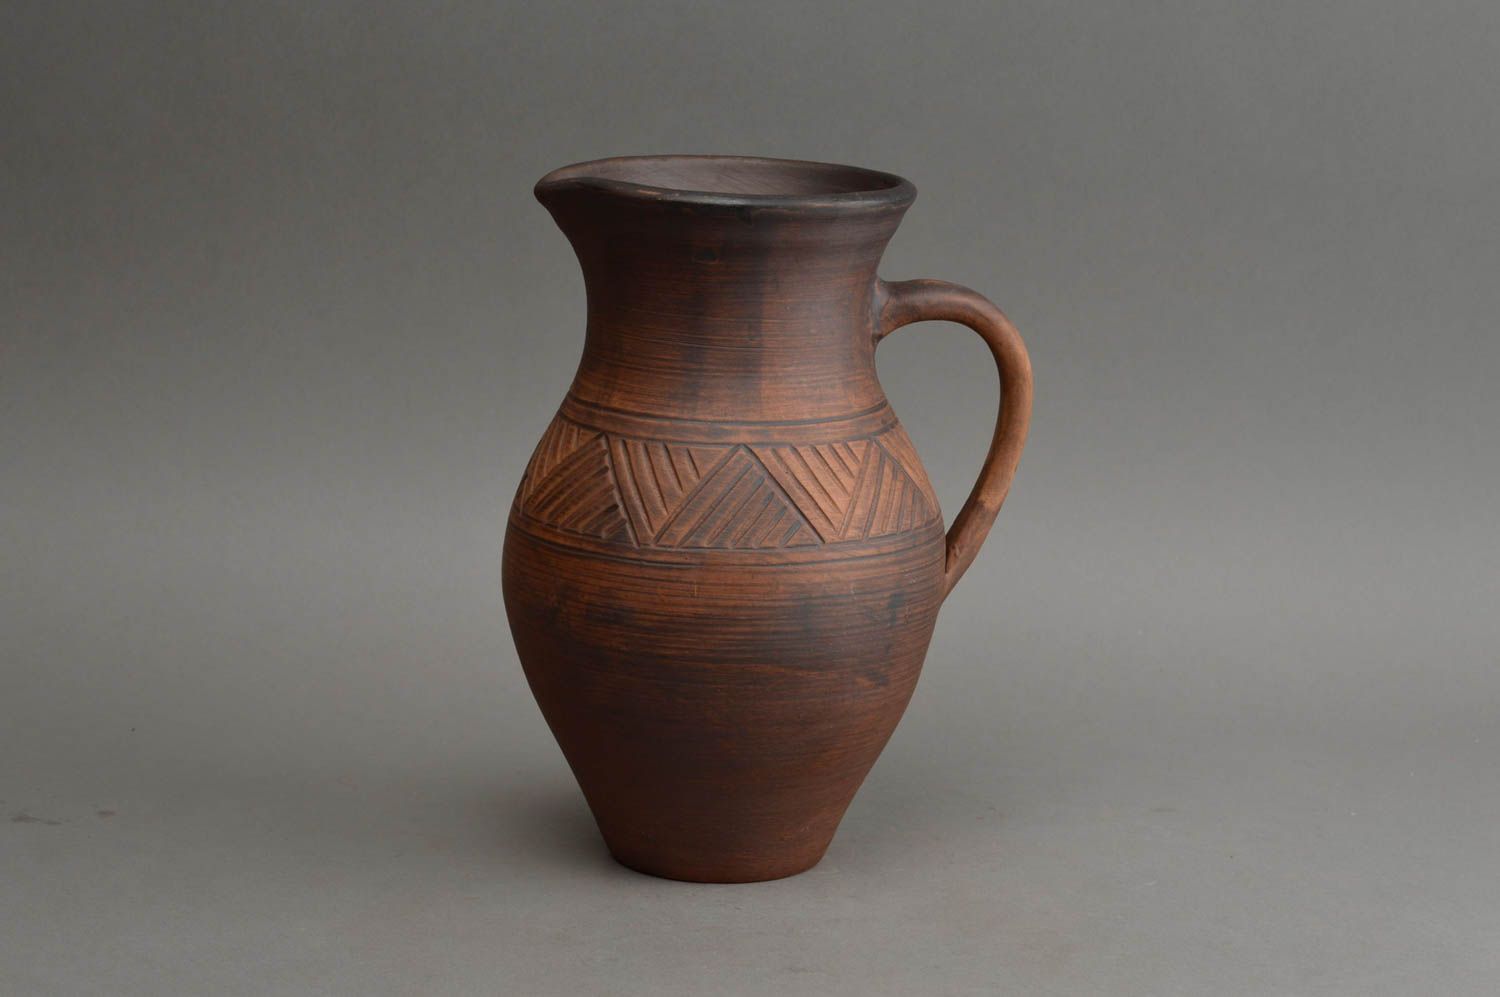 40 oz ceramic milk jug with handle and molded ornament 1,8 lb photo 2